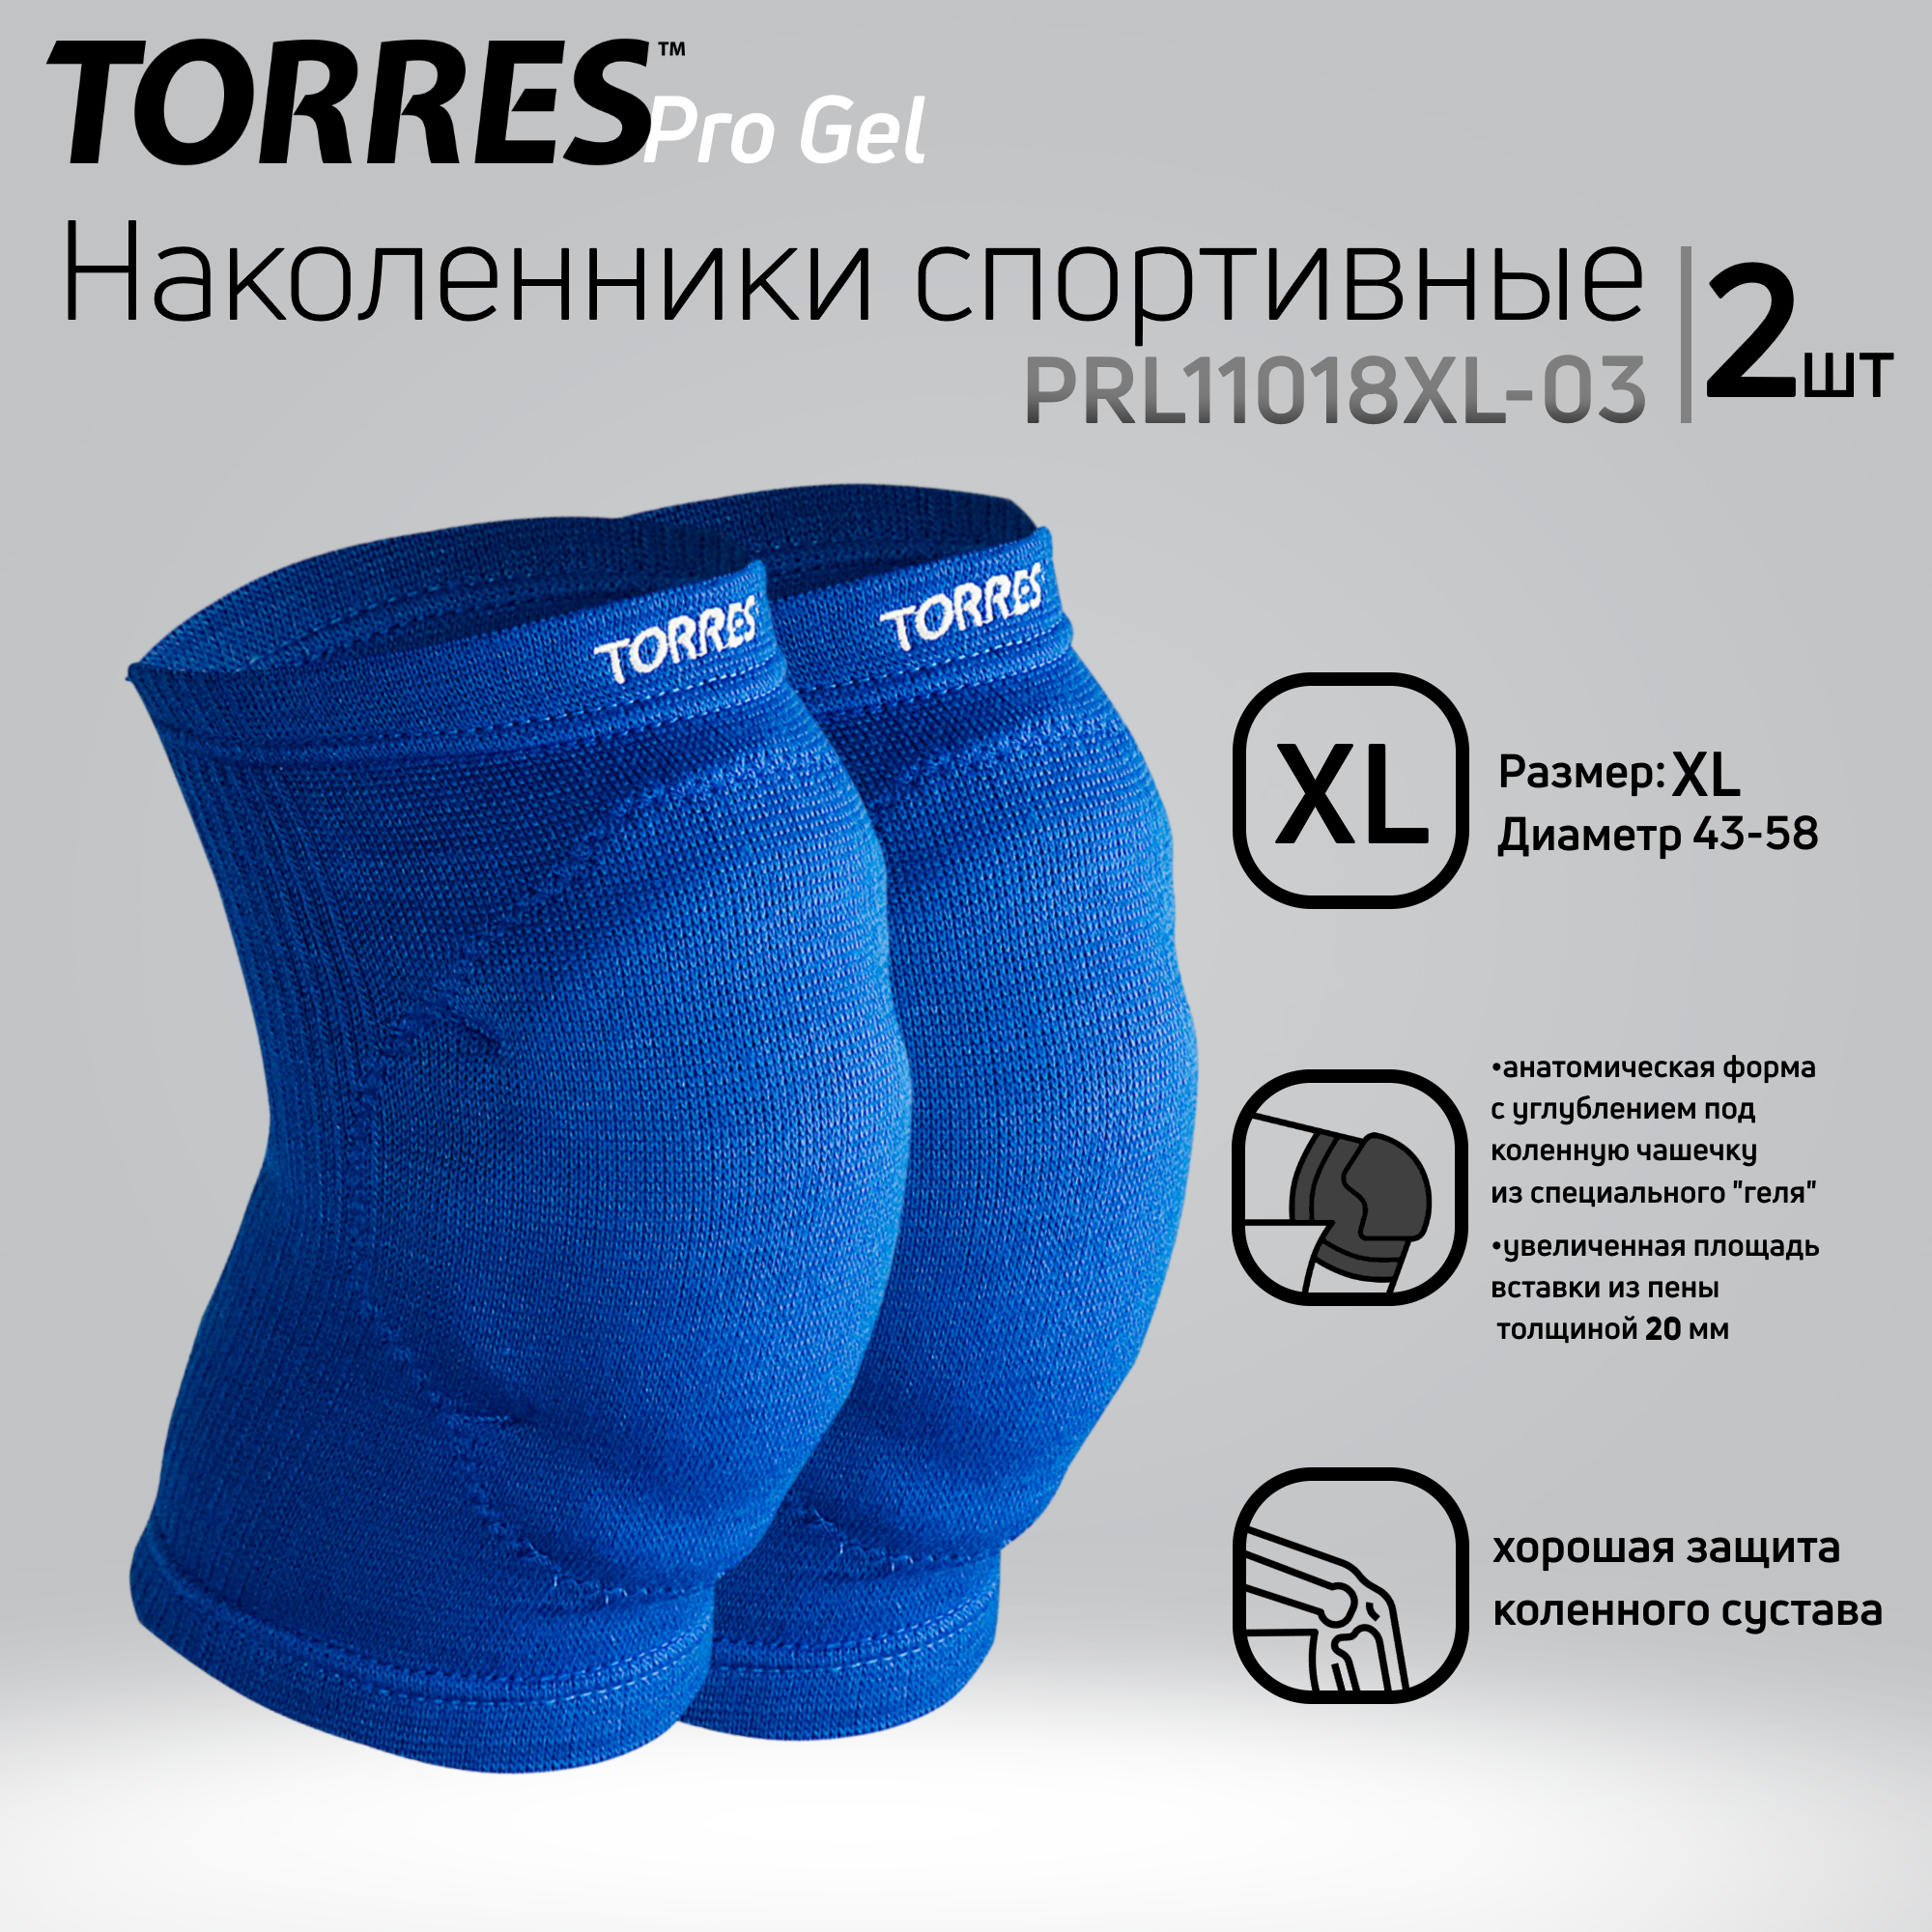 Наколенники спортивные Torres Pro Gel арт.PRL11018L-03 р.L